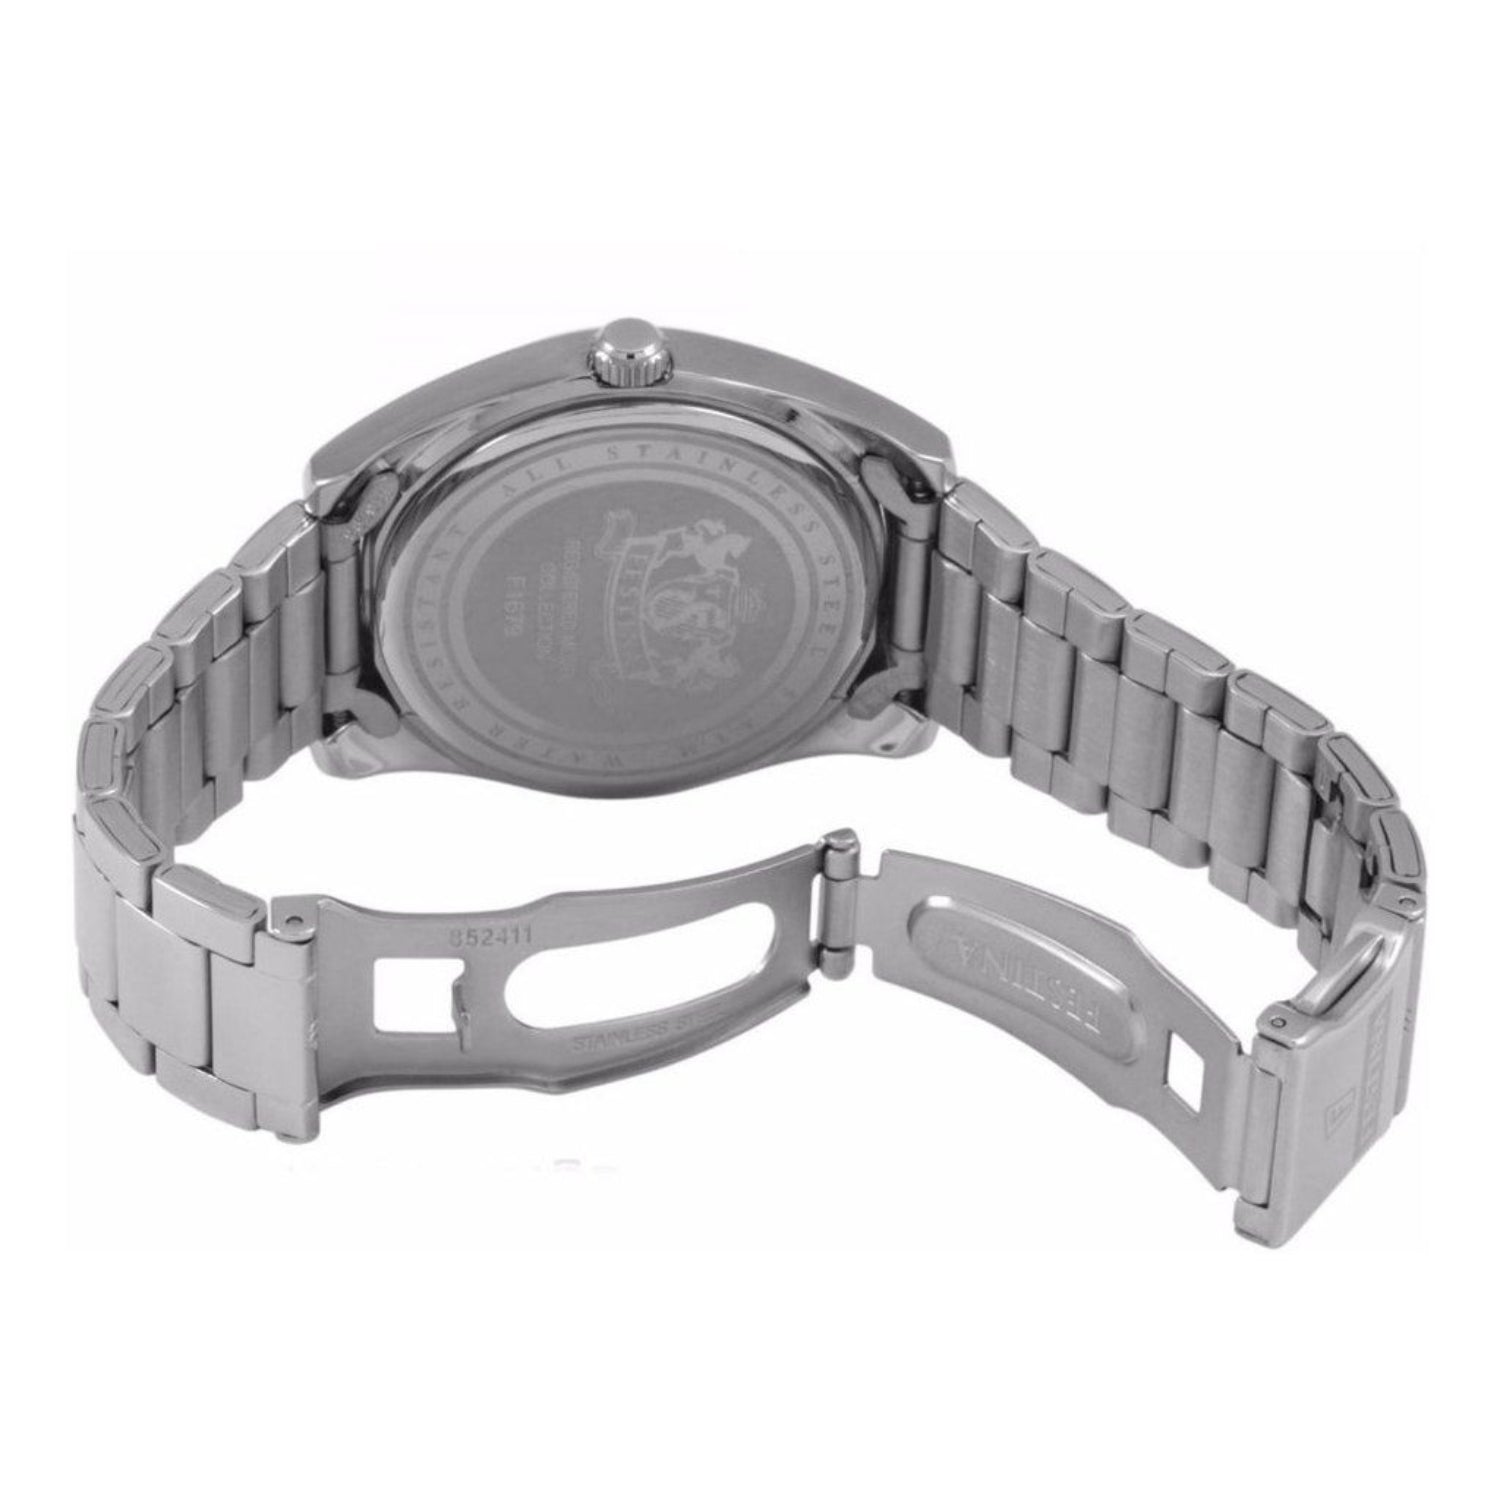 Festina women's white dial quartz watch - f16790/a